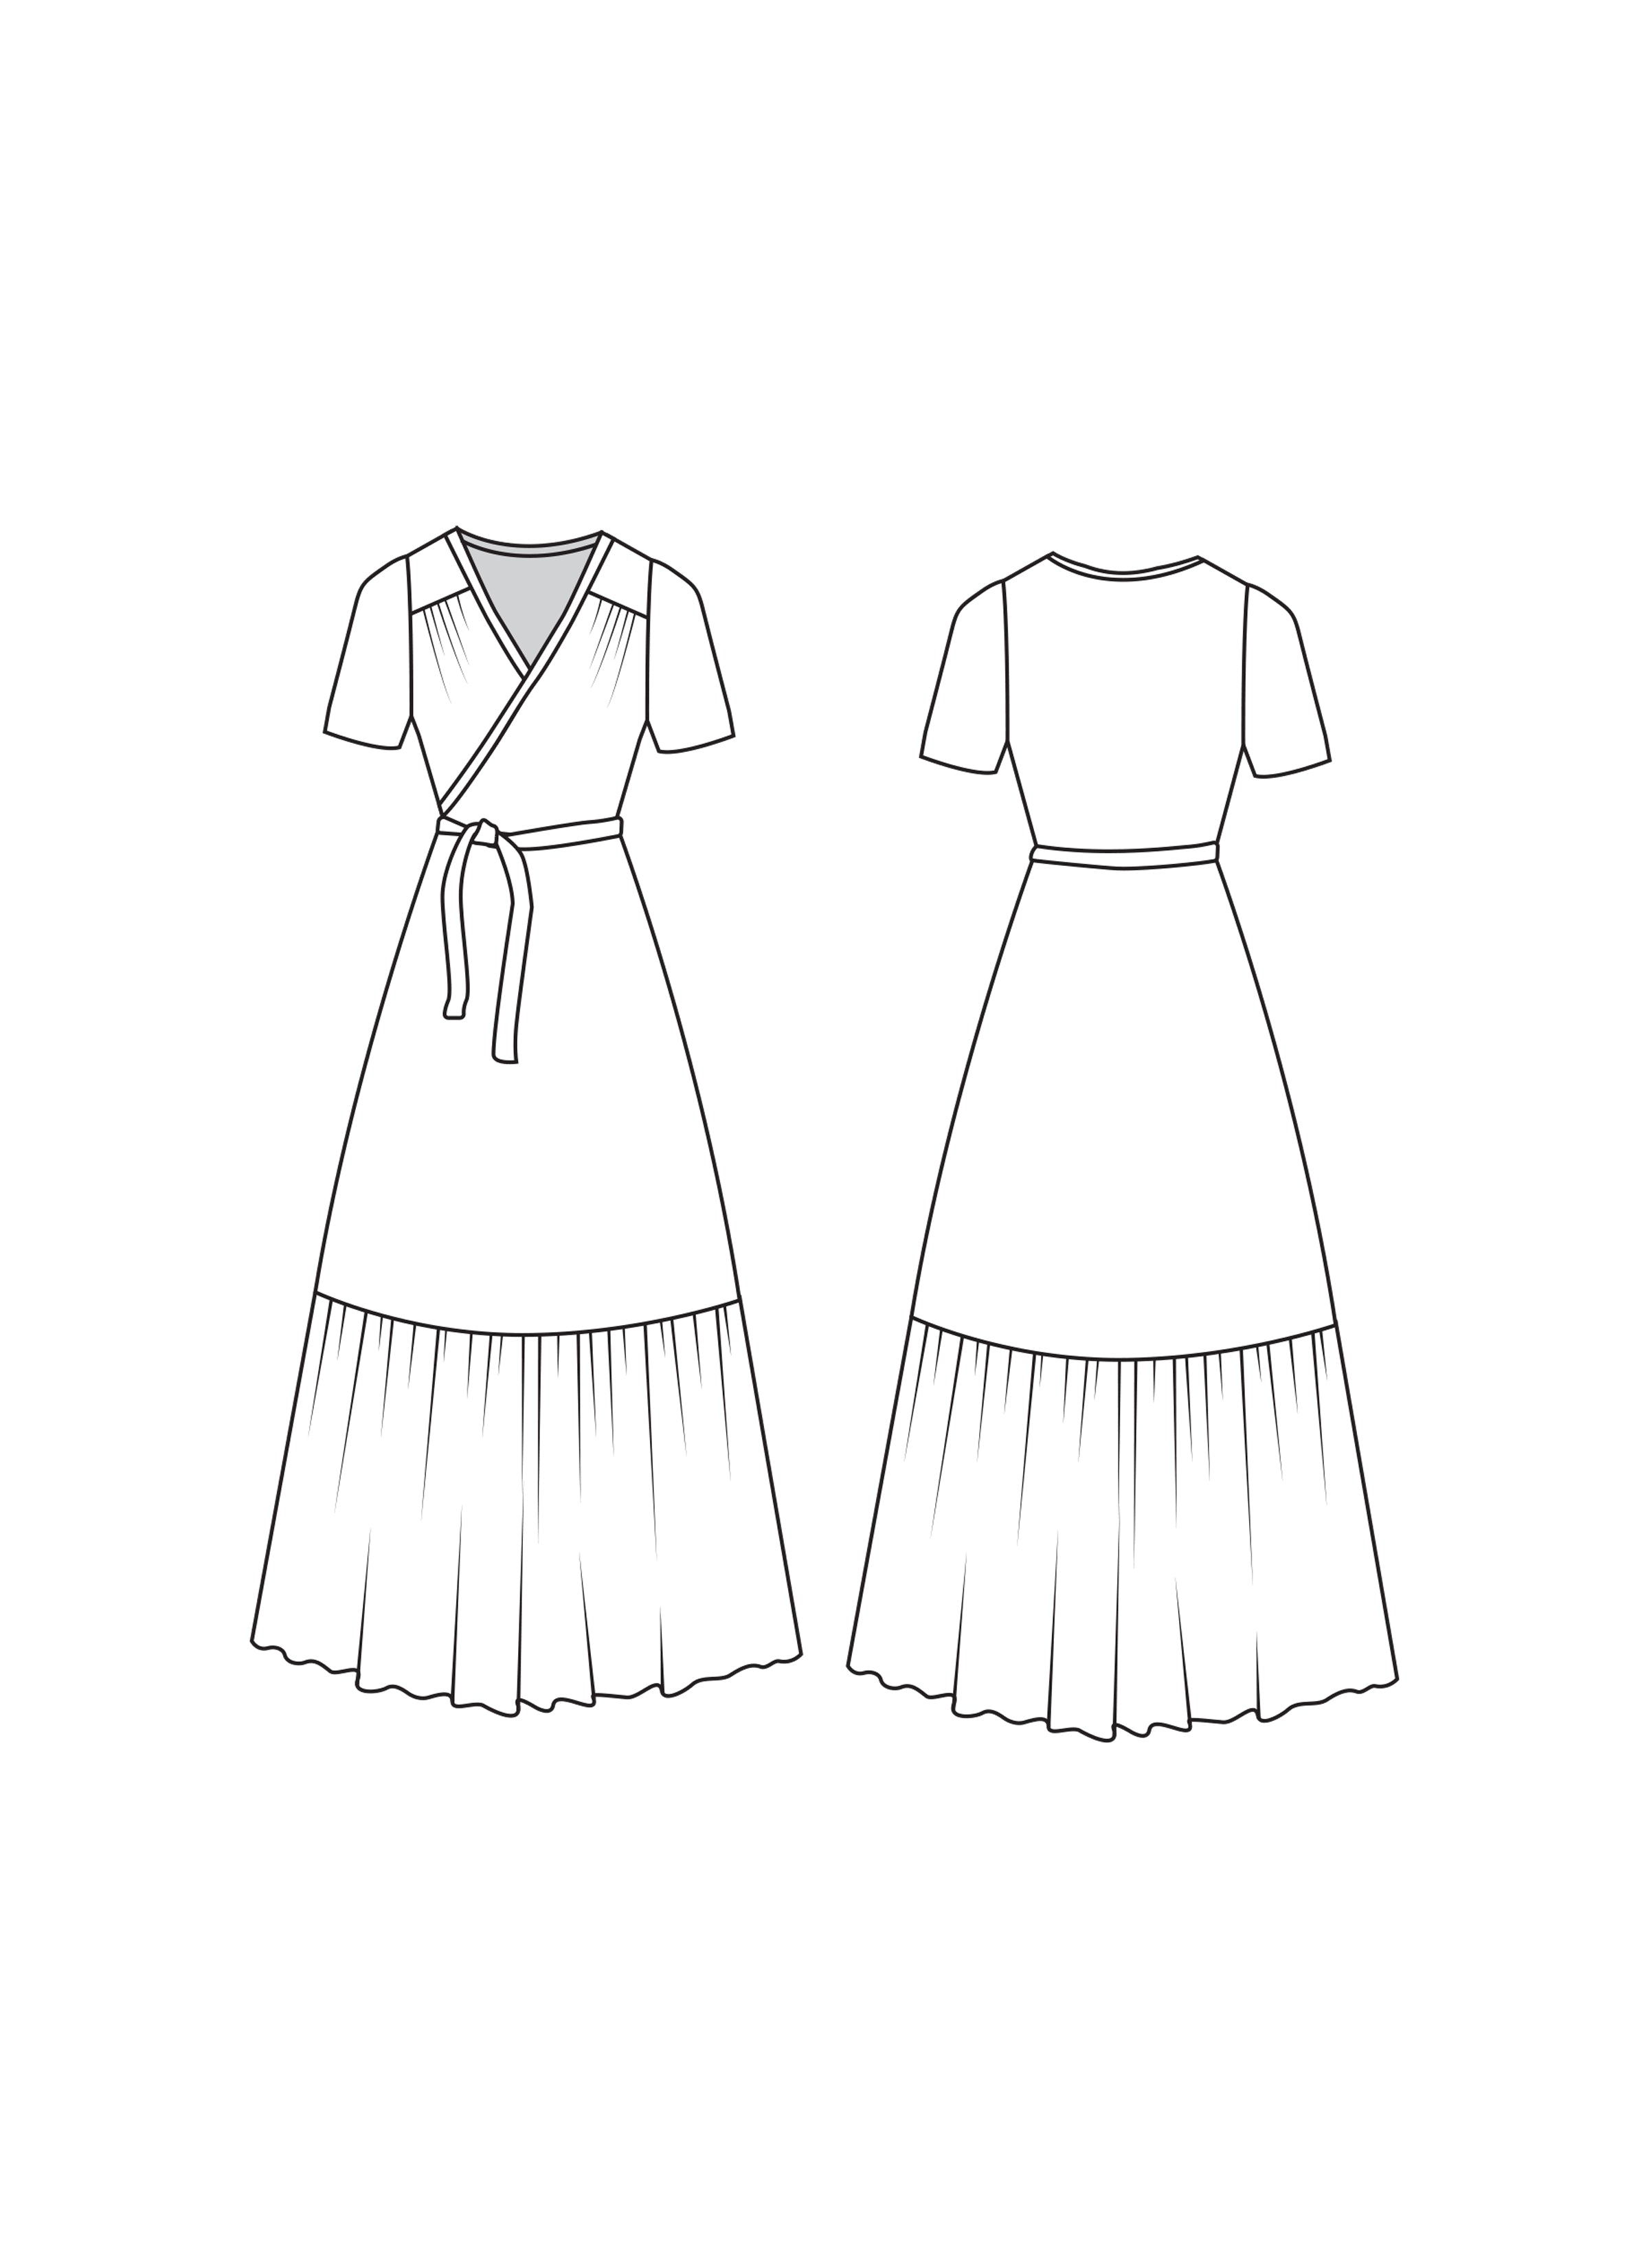 The Westcliff Dress - PDF Pattern